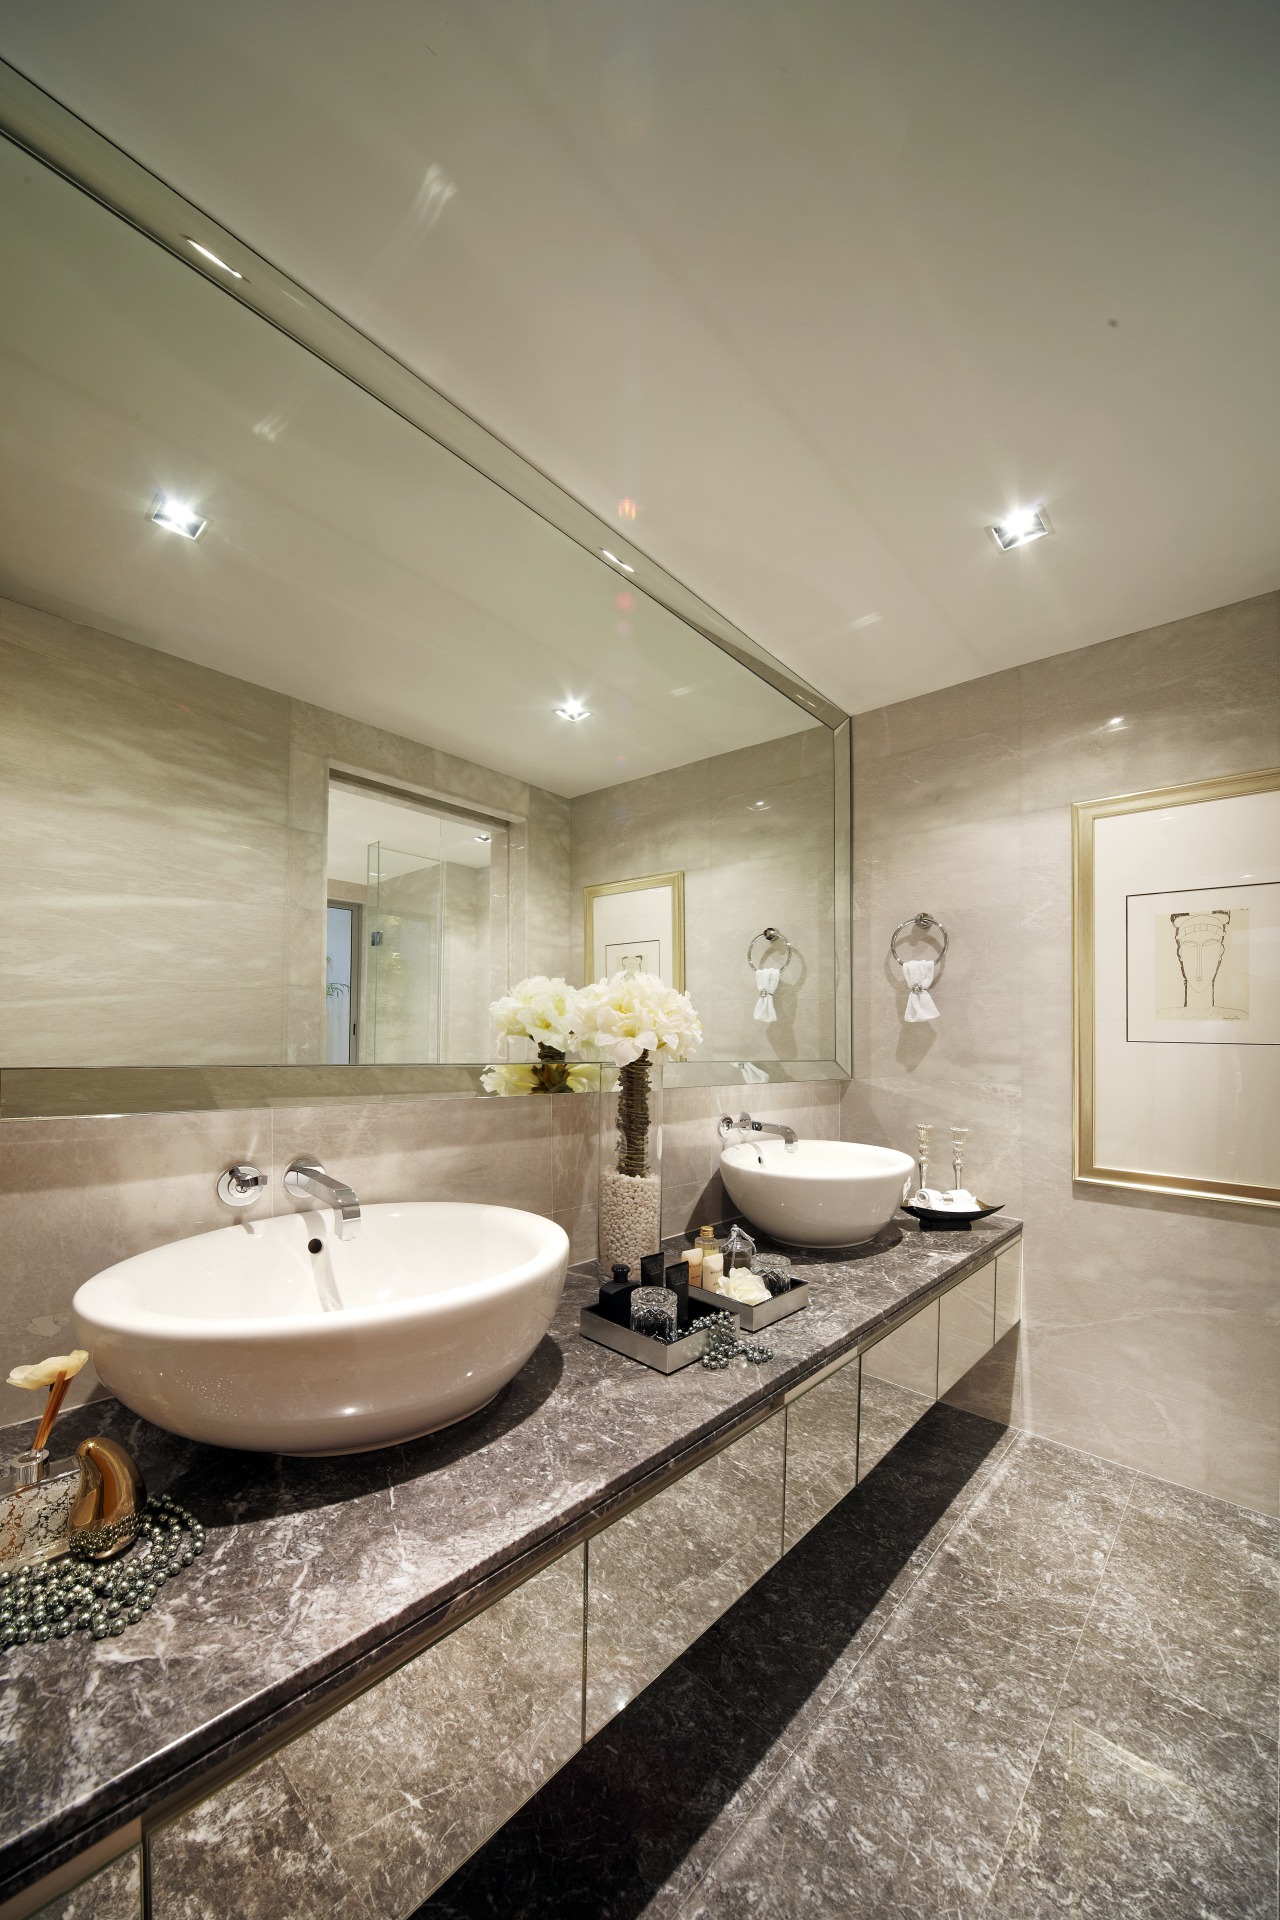 The mirror-fronted vanity in this glamorous suite continues bathroom, ceiling, estate, floor, home, interior design, real estate, room, sink, orange, brown